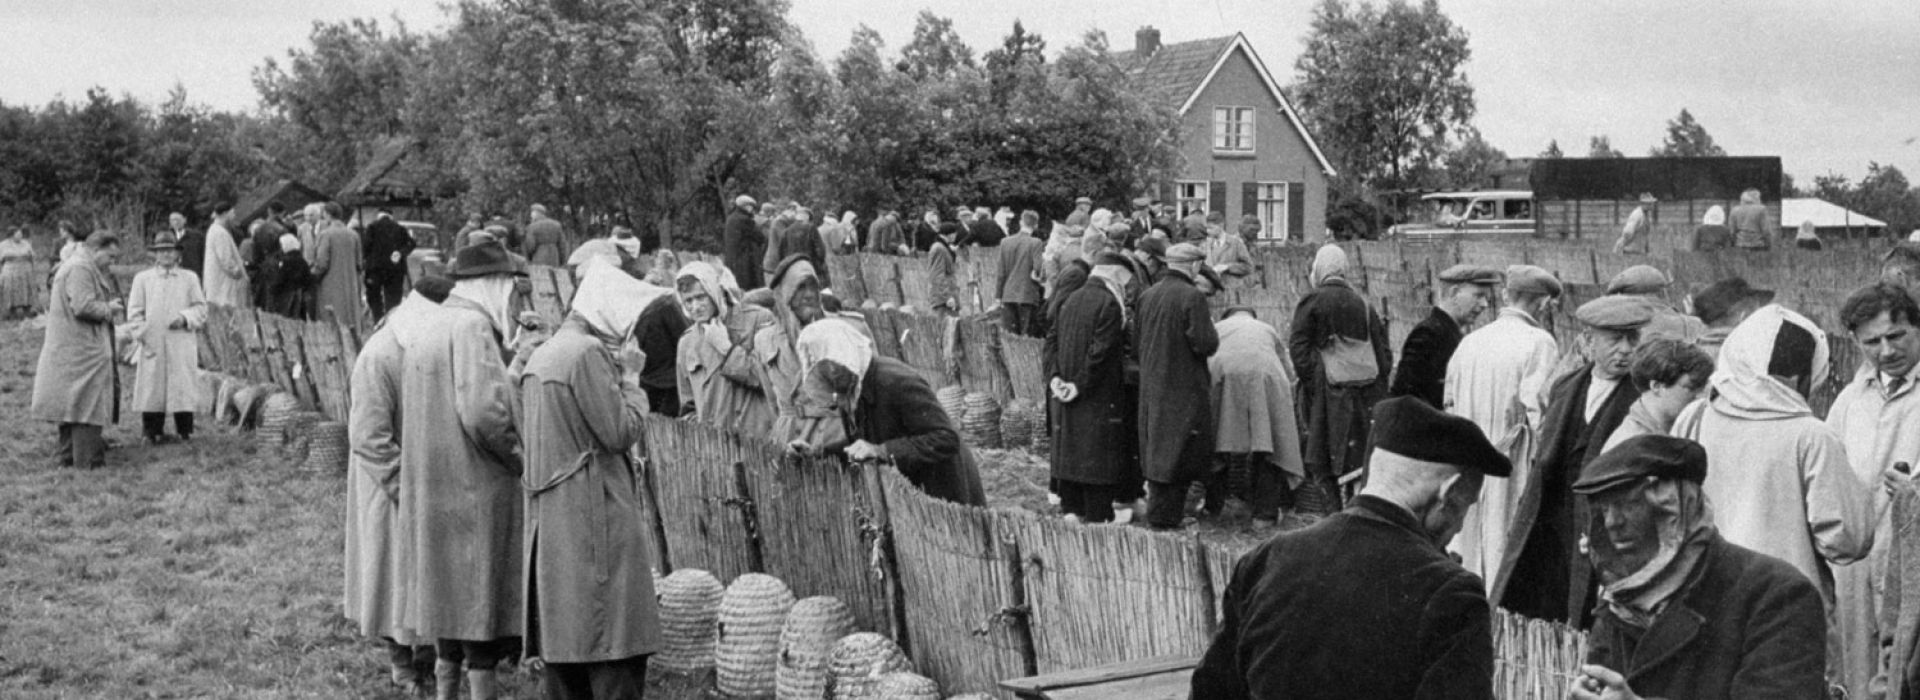 bee-market-in-the-netherlands-1956-1